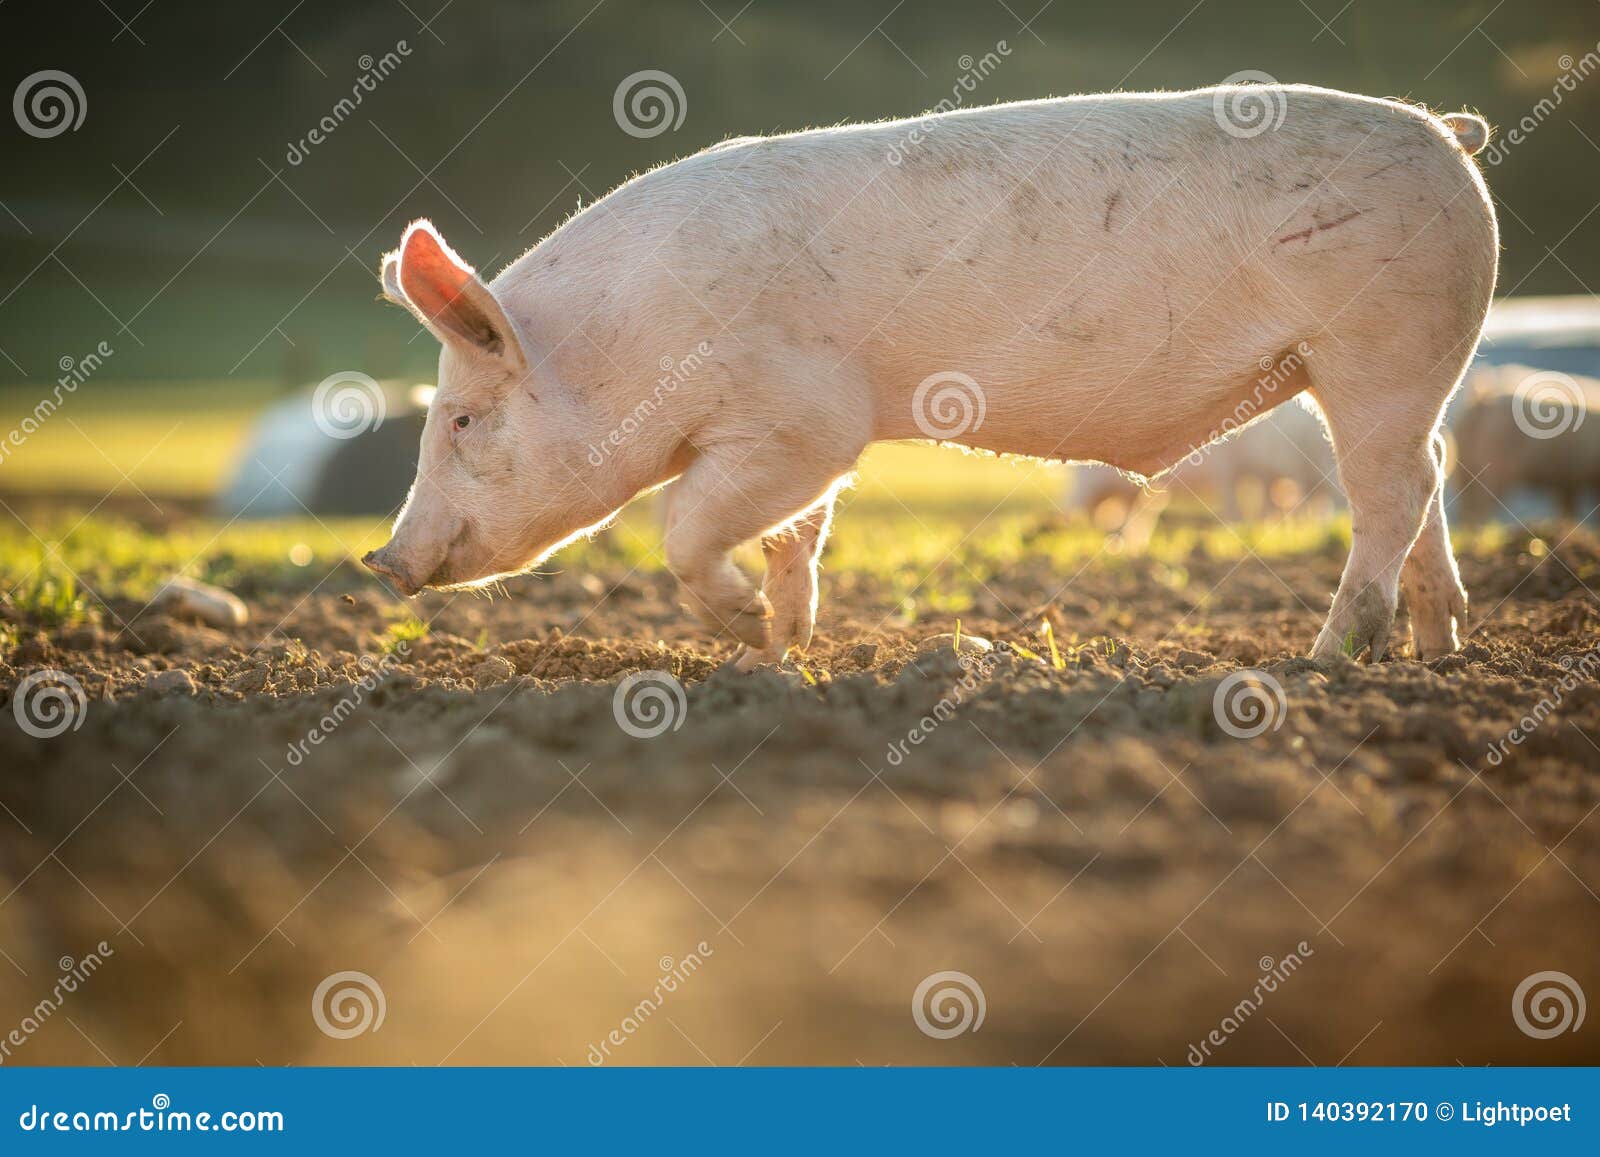 pigs in an organic meat farm